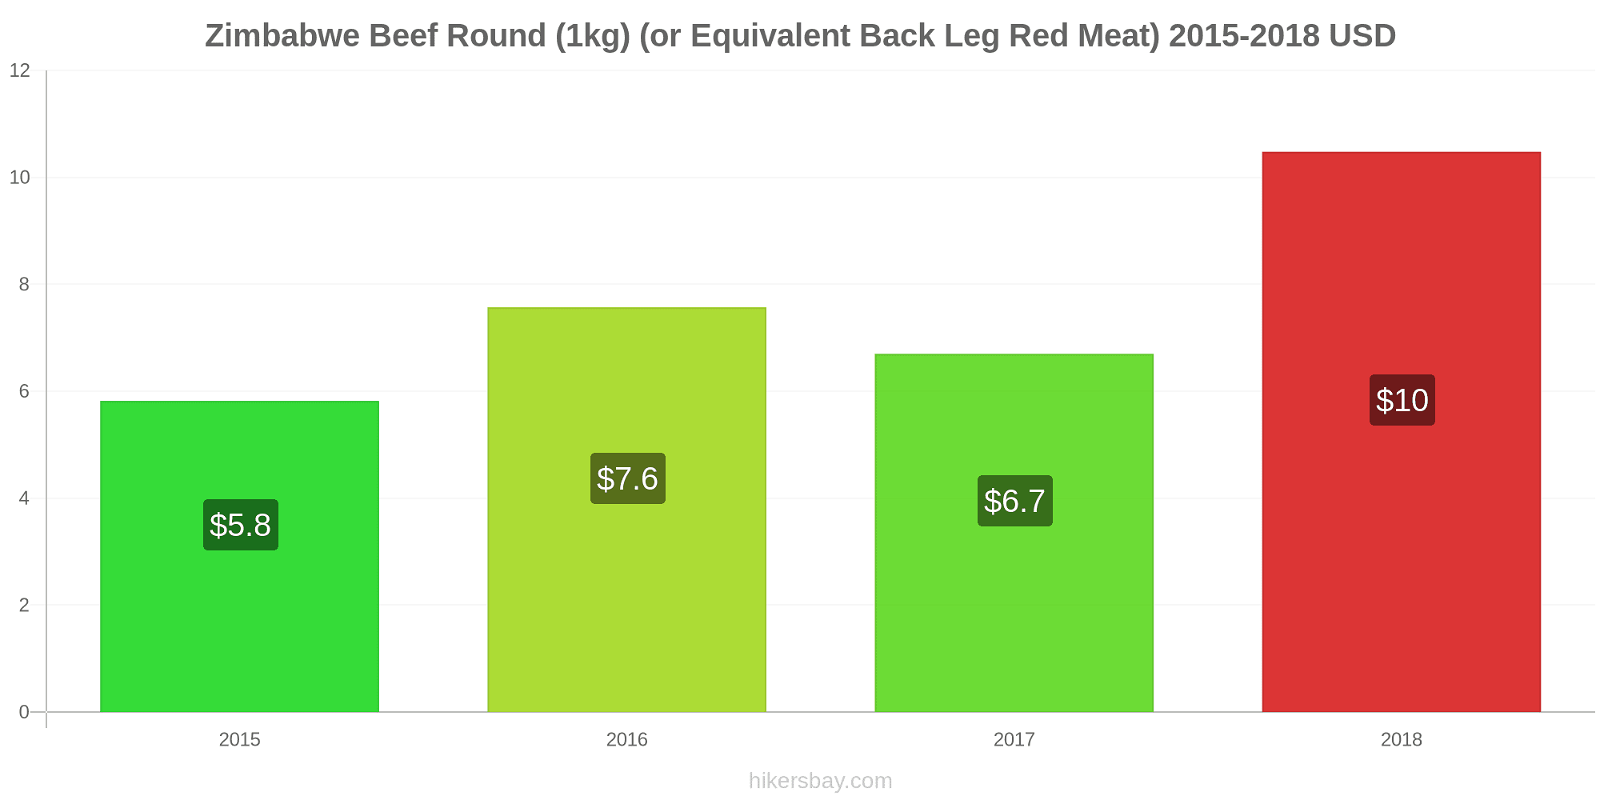 Zimbabwe price changes Beef (1kg) (or similar red meat) hikersbay.com